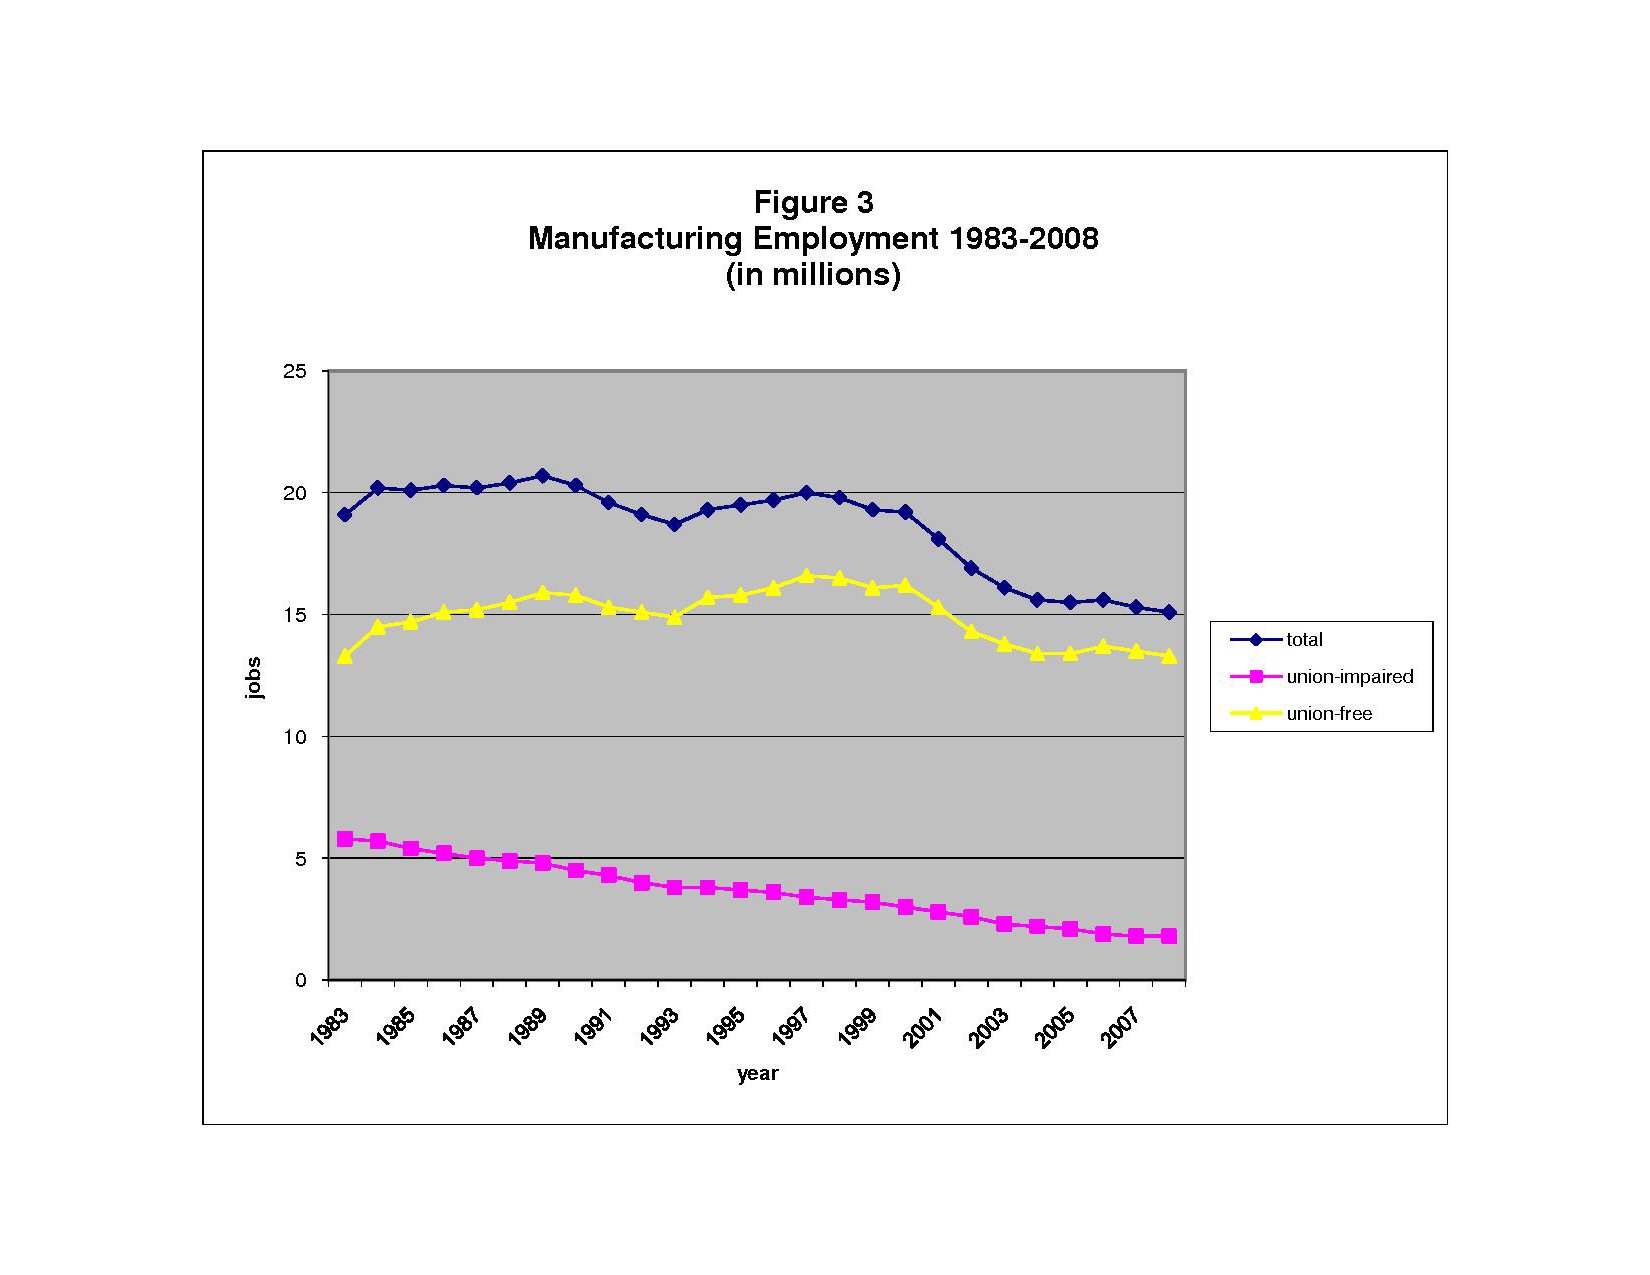 Figure 3. Manufacturing Employment, 1983-2008